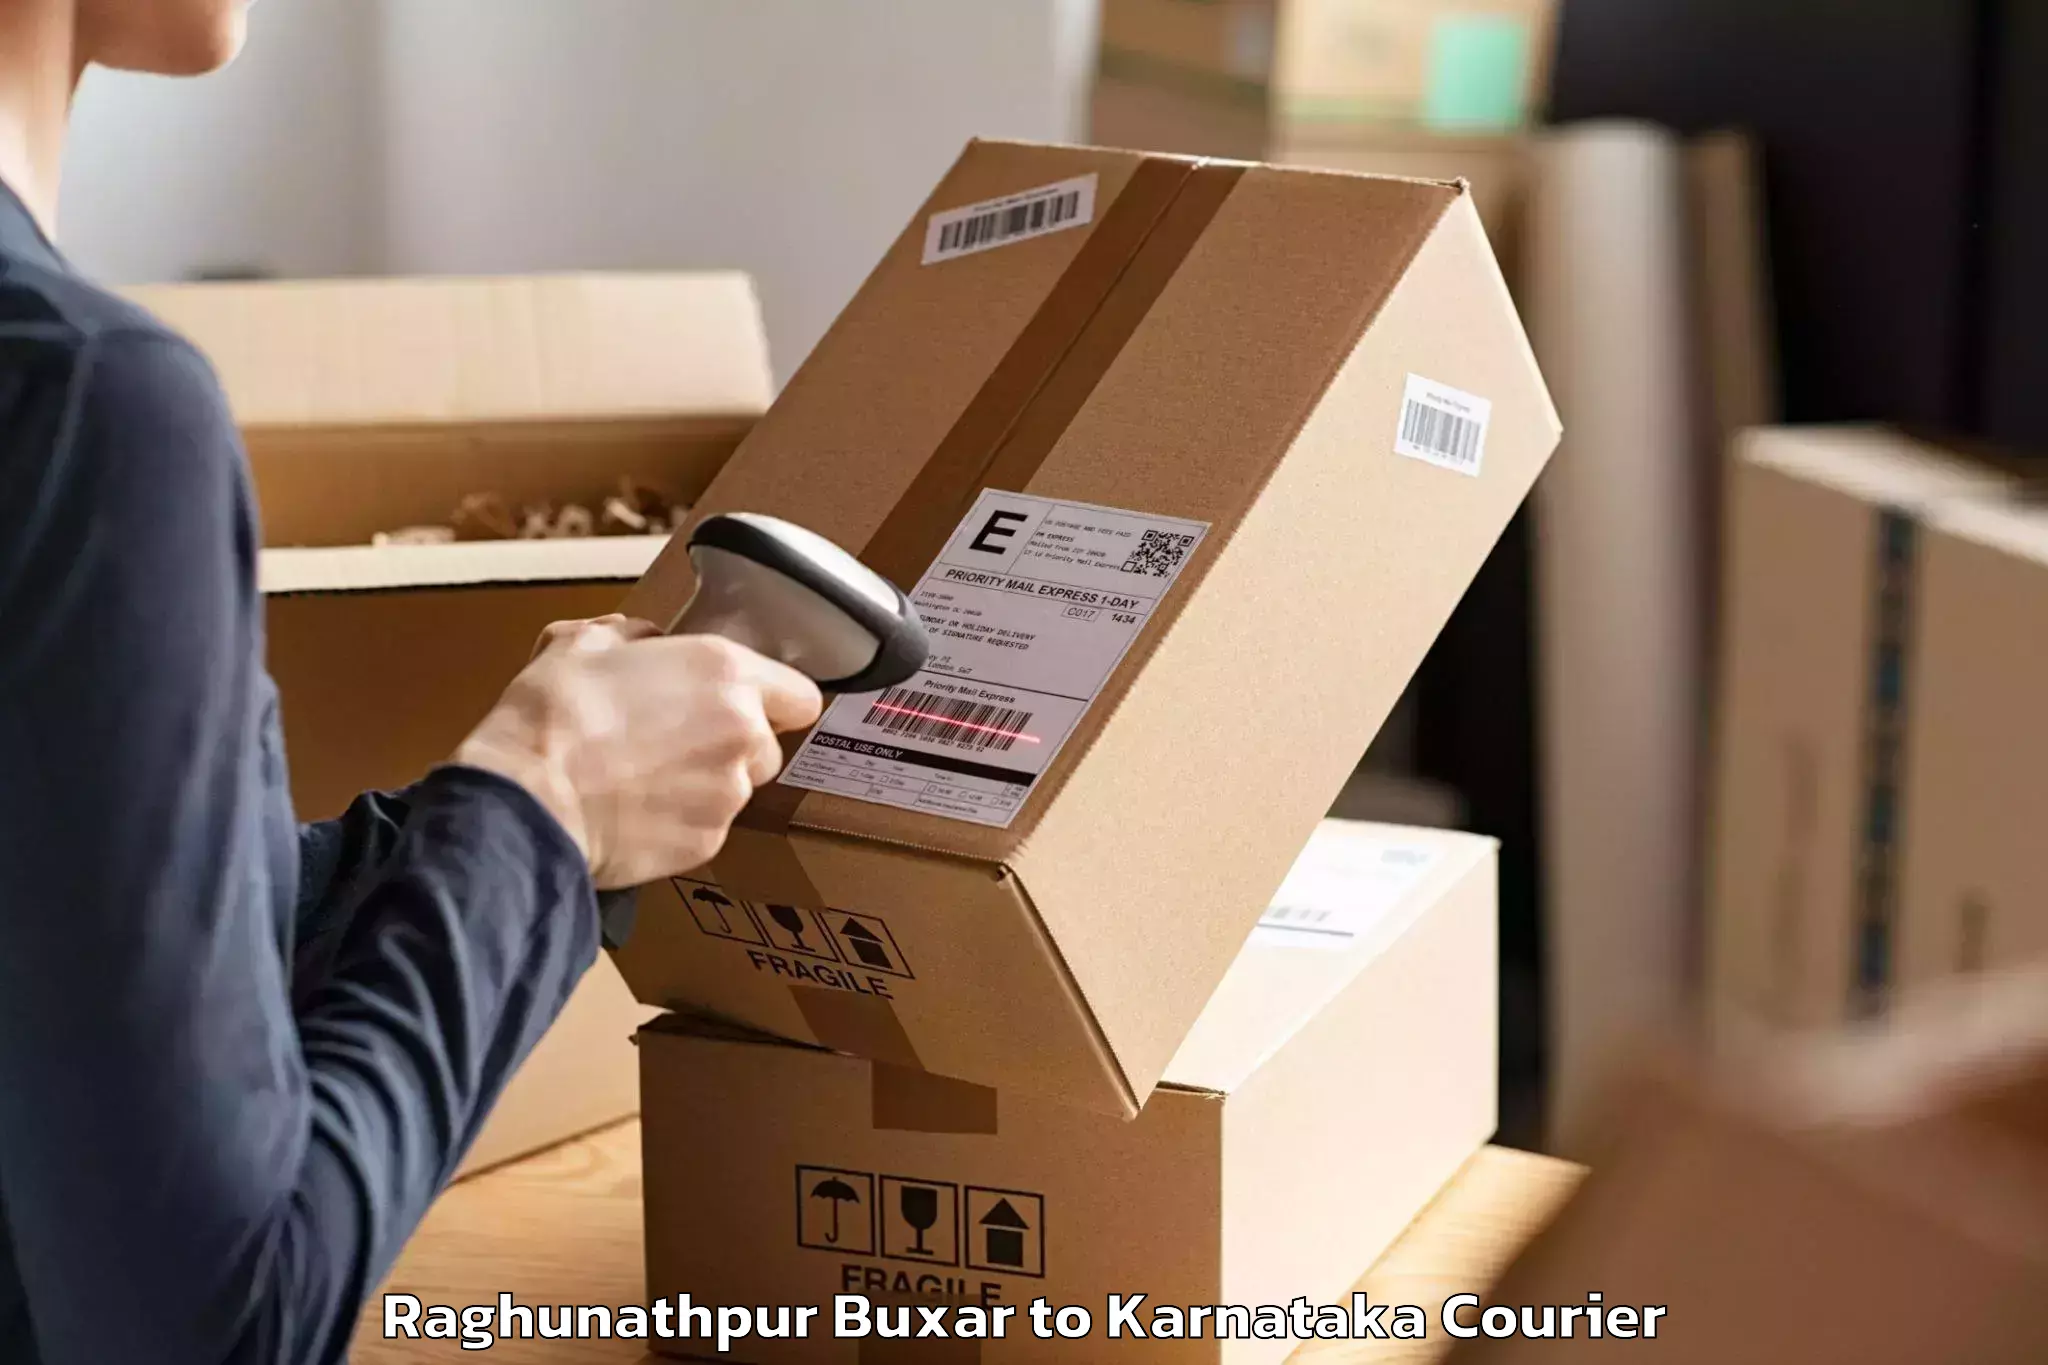 Professional moving assistance Raghunathpur Buxar to Bengaluru